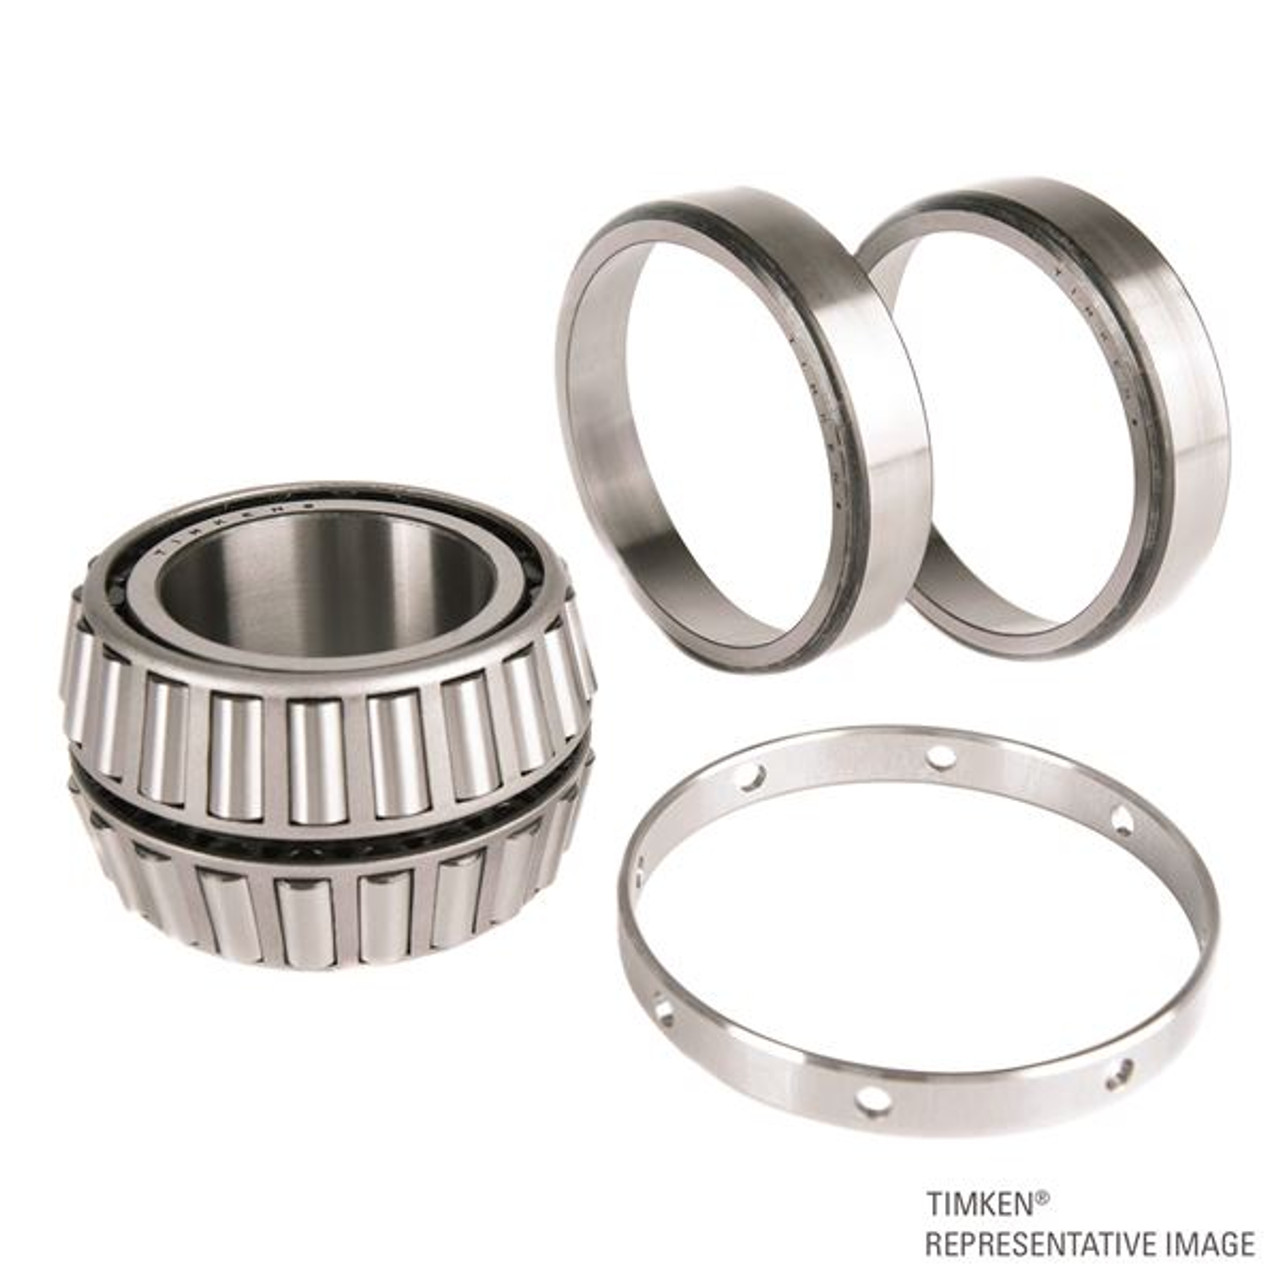 Timken® TDI Single Double Cone Assembly  HM256849-90069